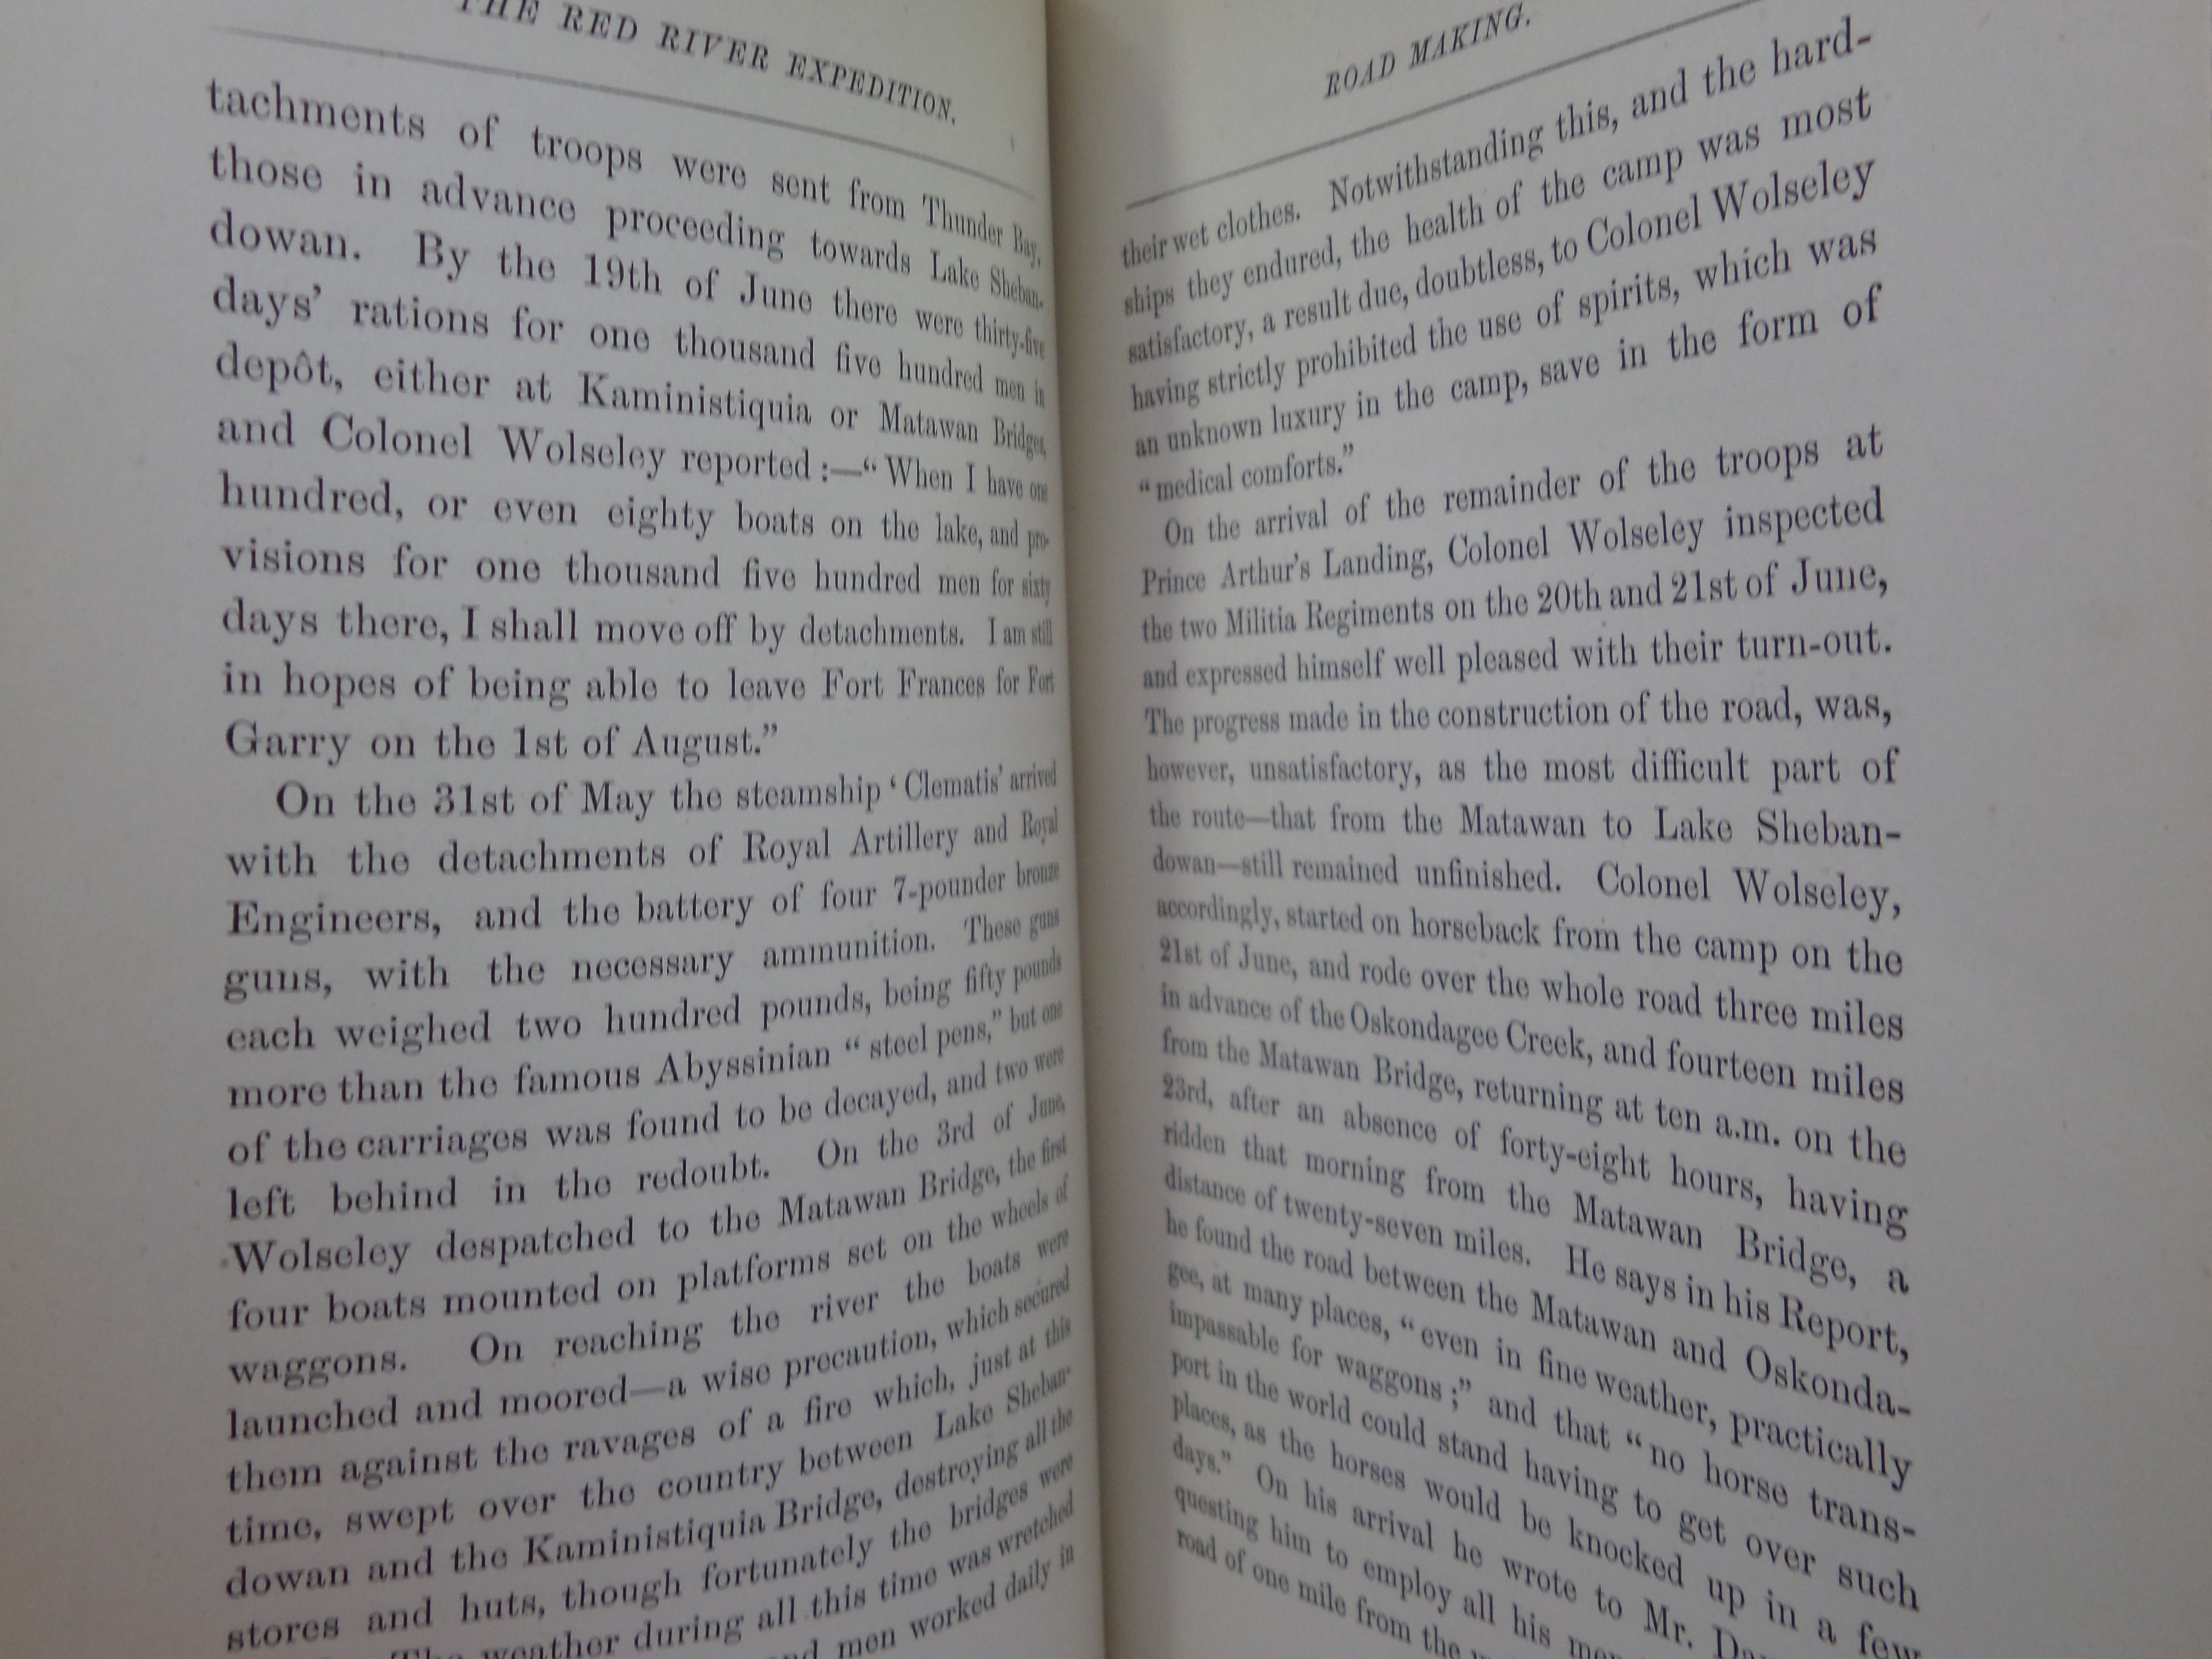 A MEMOIR OF LIEUTENANT-GENERAL SIR GARNET J. WOLSELEY BY CHARLES RATHBONE LOW 1878 FIRST EDITION FINELY BOUND BY BAYNTUN-RIVIERE